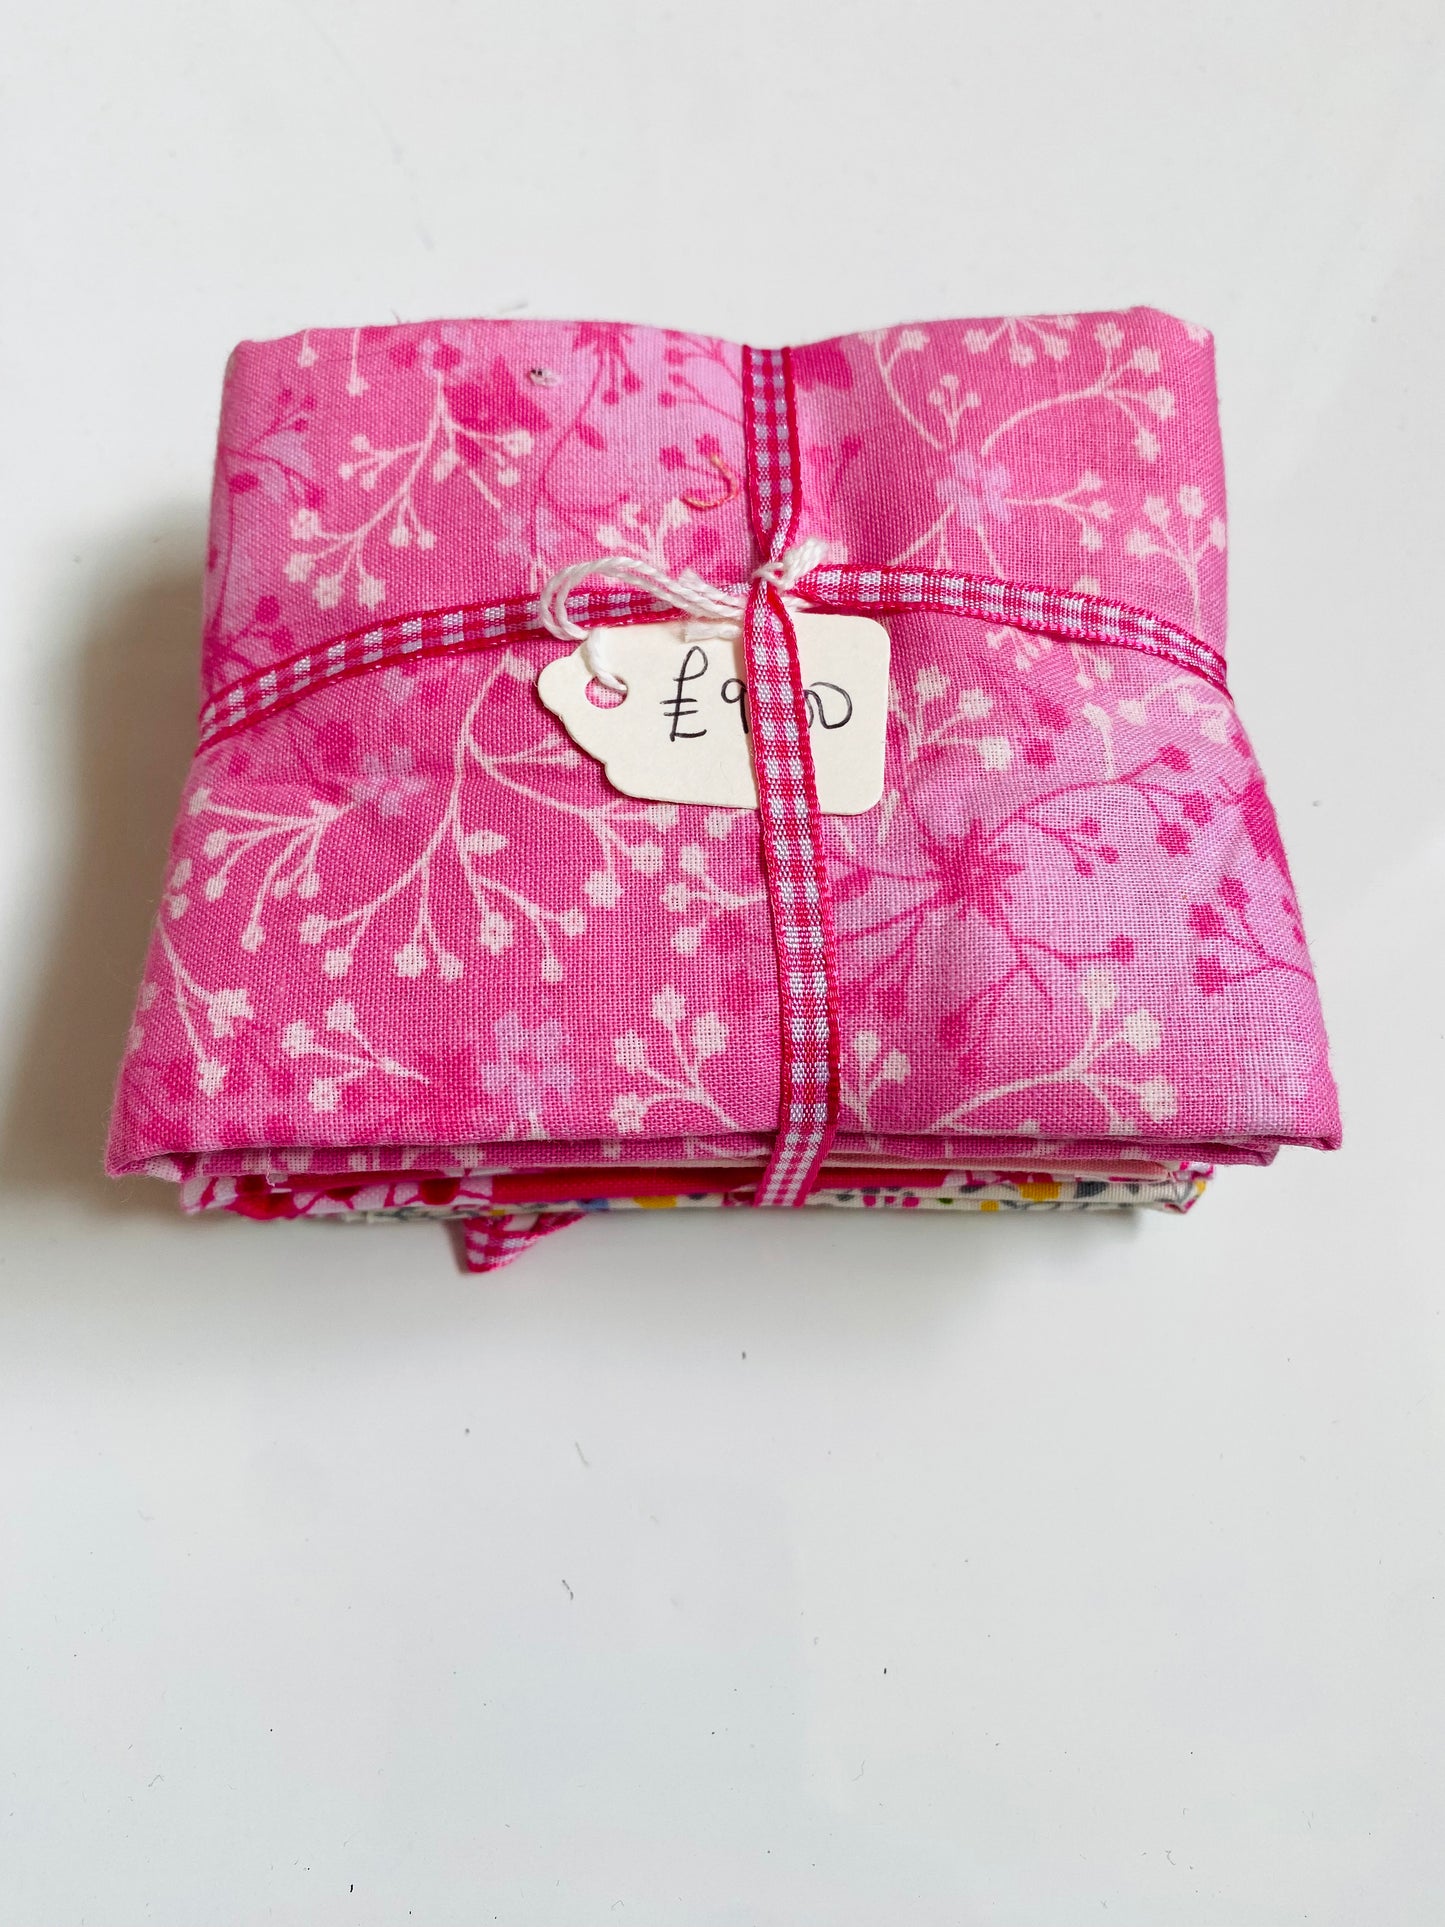 Fabric Fat Quarter Bundle - 'Lovely Summer Pinks' - 100% Cotton